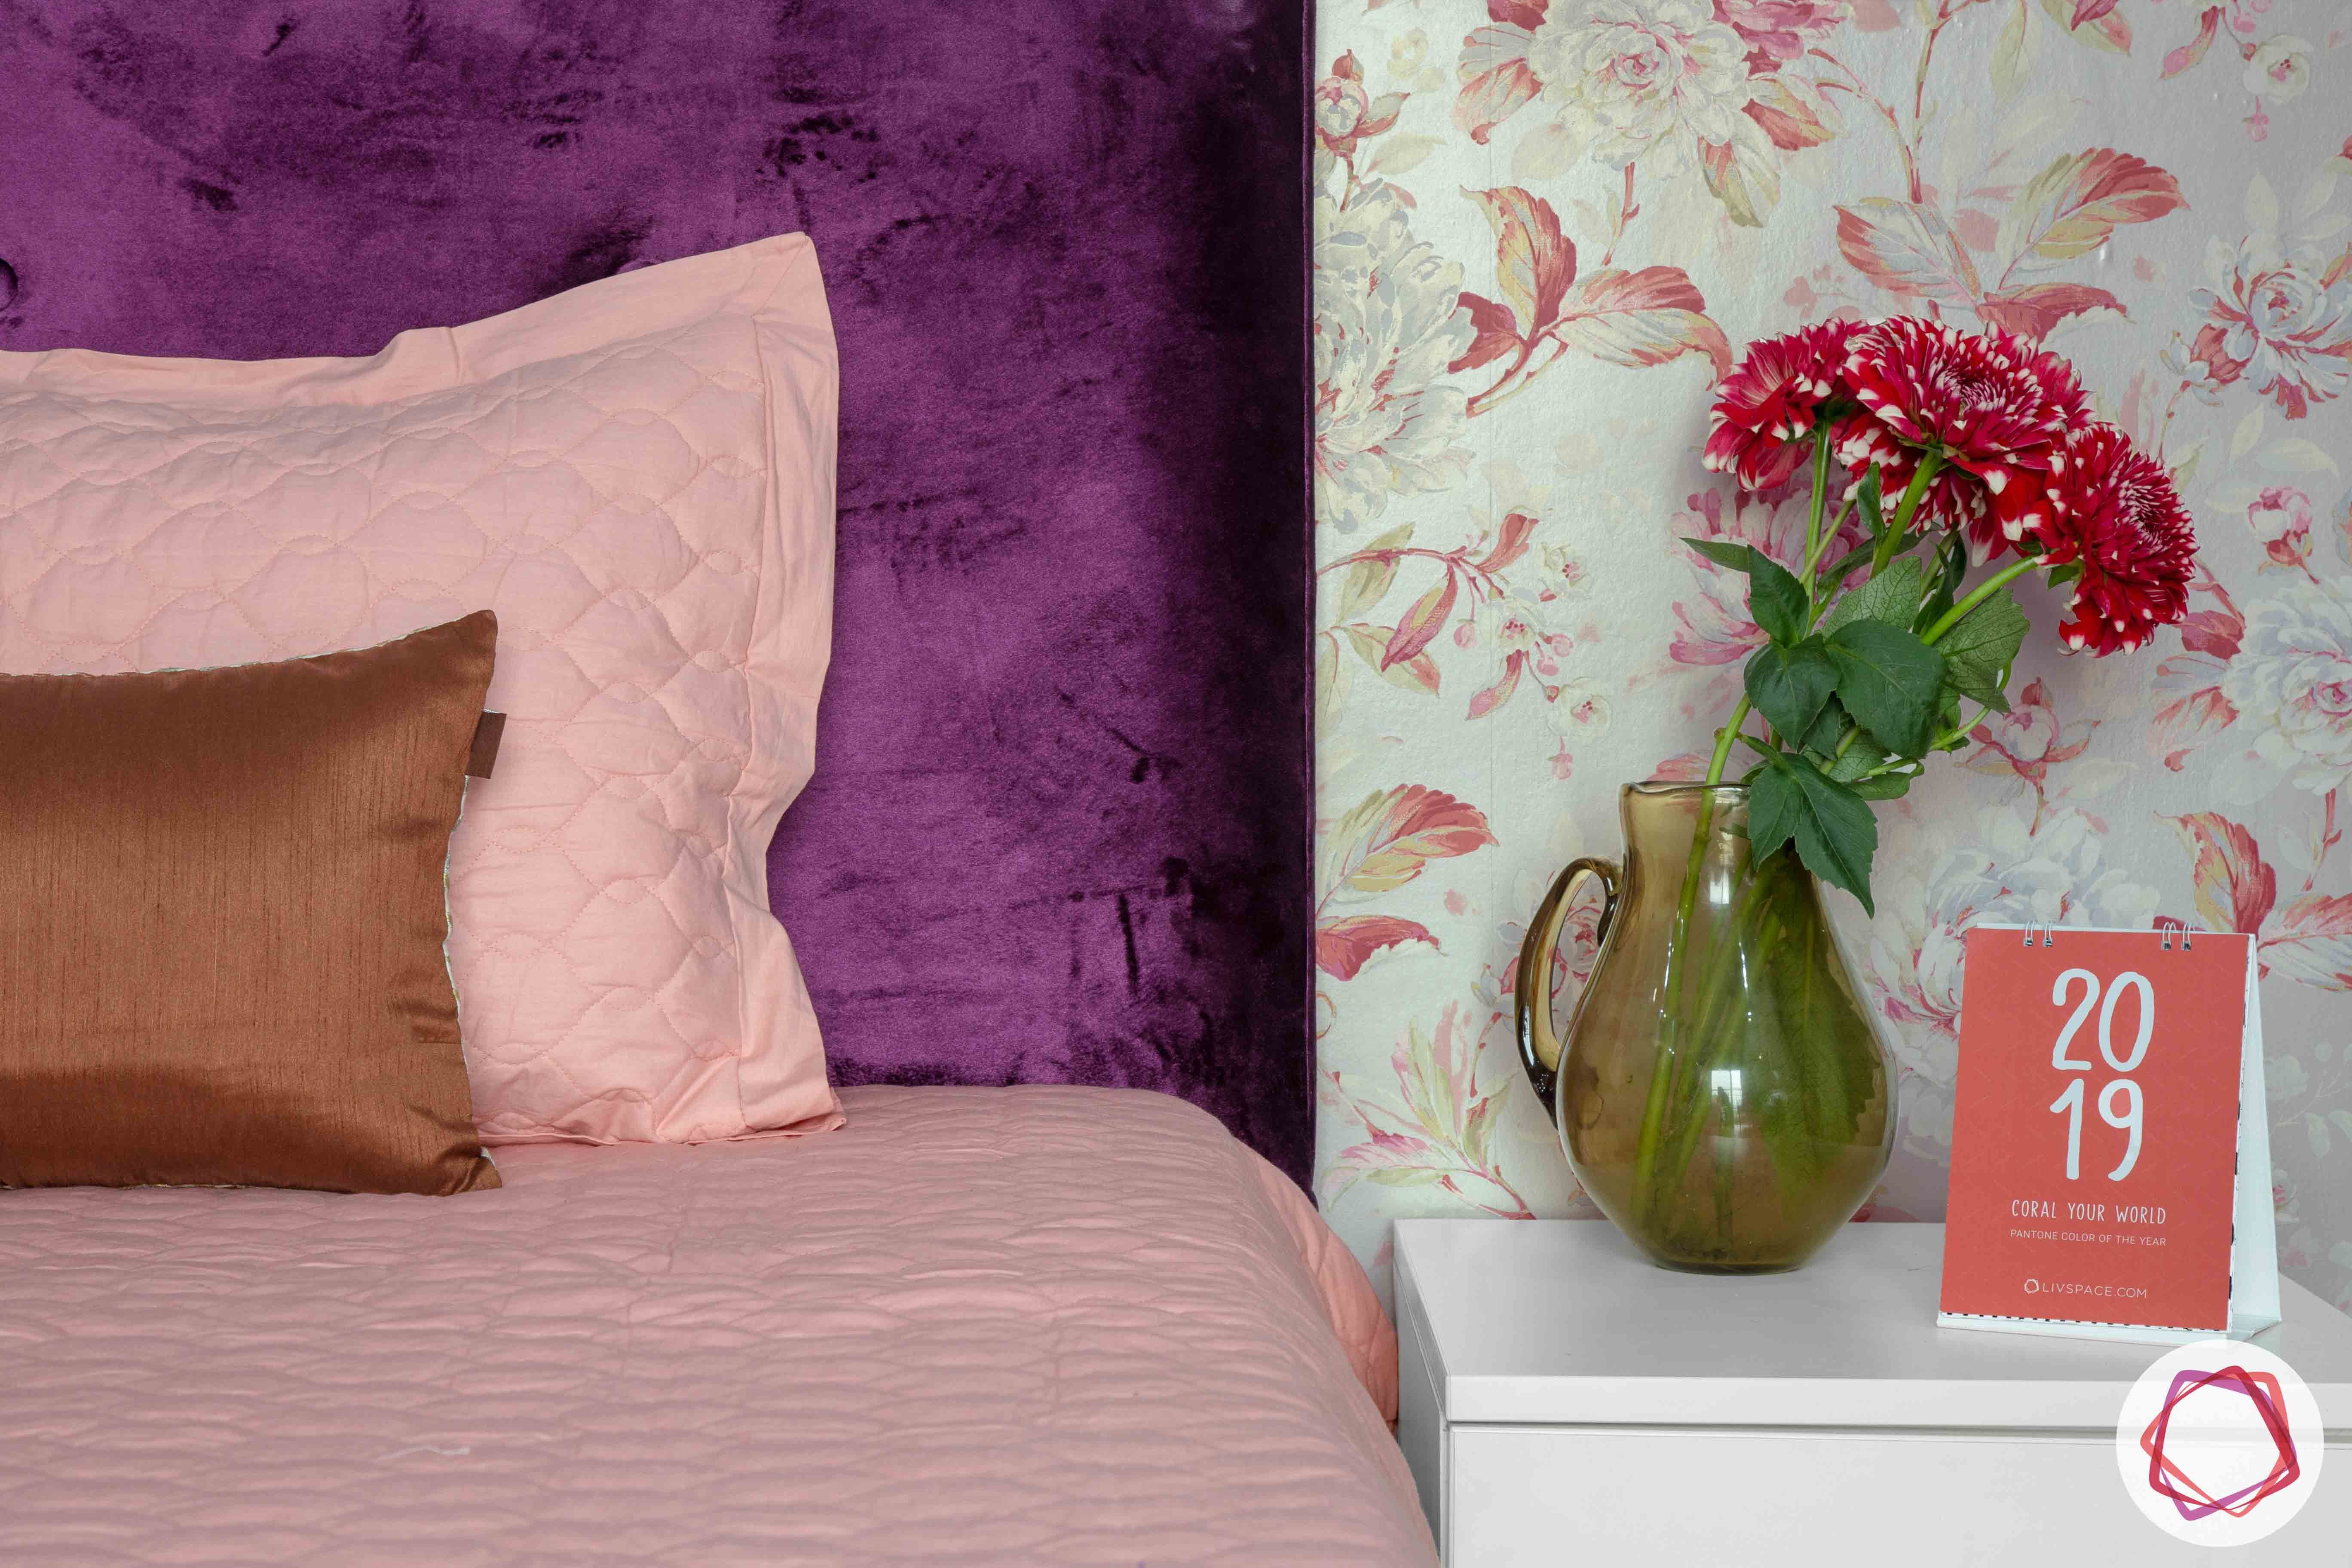 3bhk flat interior design-floral wallpaper designs-purple headboard designs-white side table designs